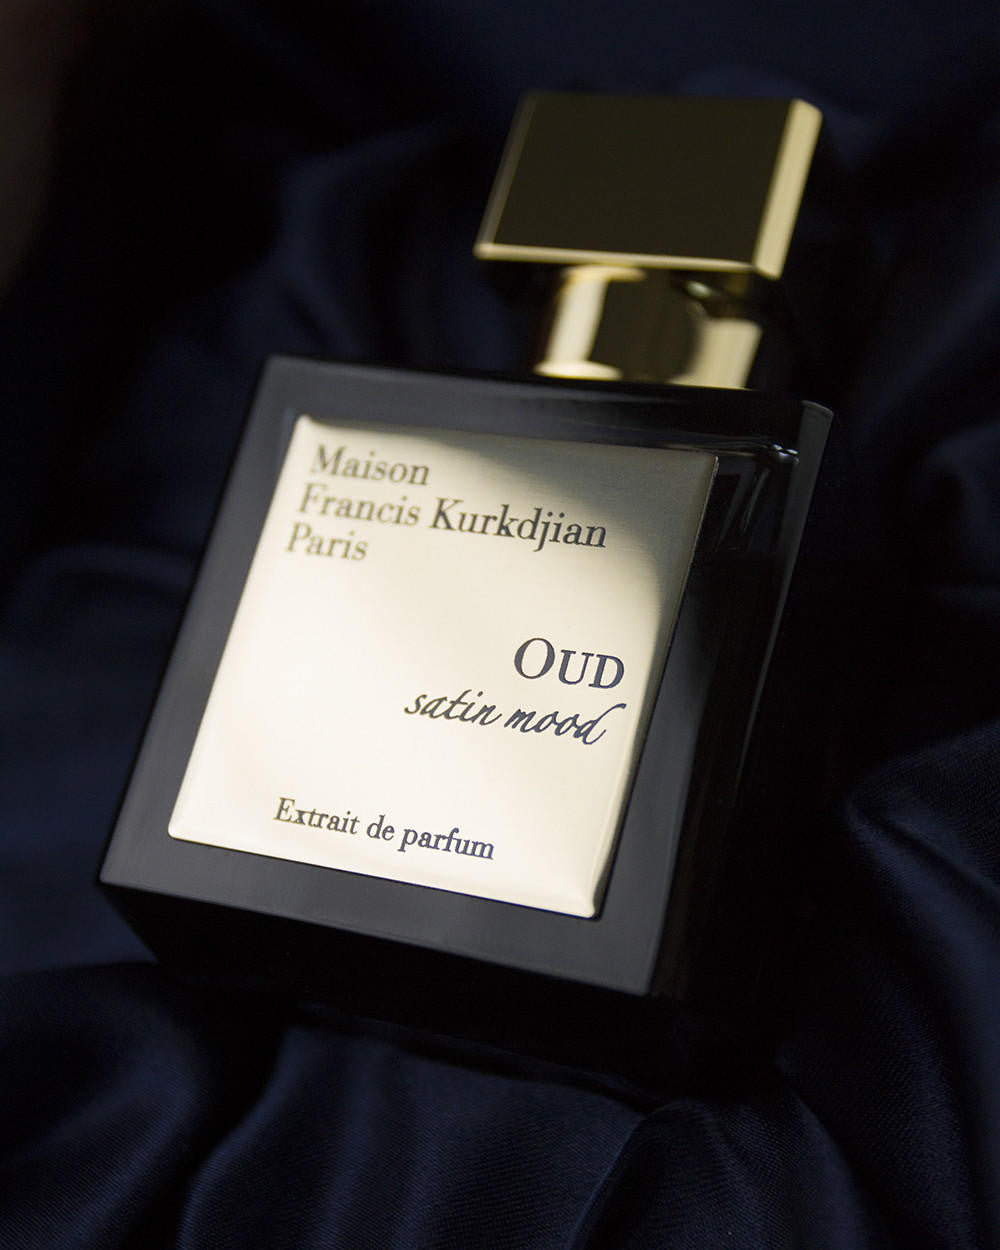  Maison Francis Kurkdjian Satin Mood Extrait de Parfum 